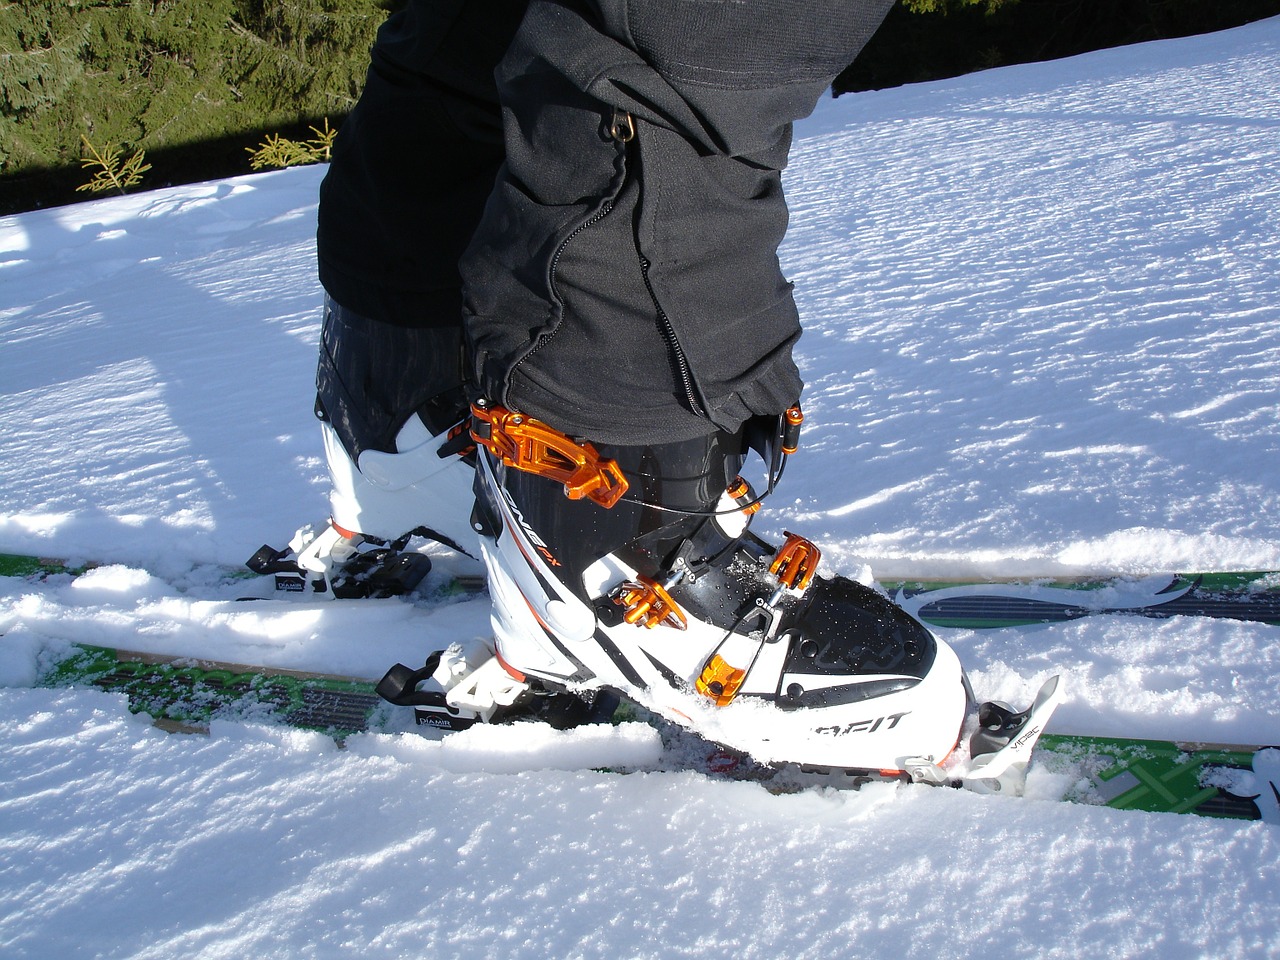 Advantage of ski rental